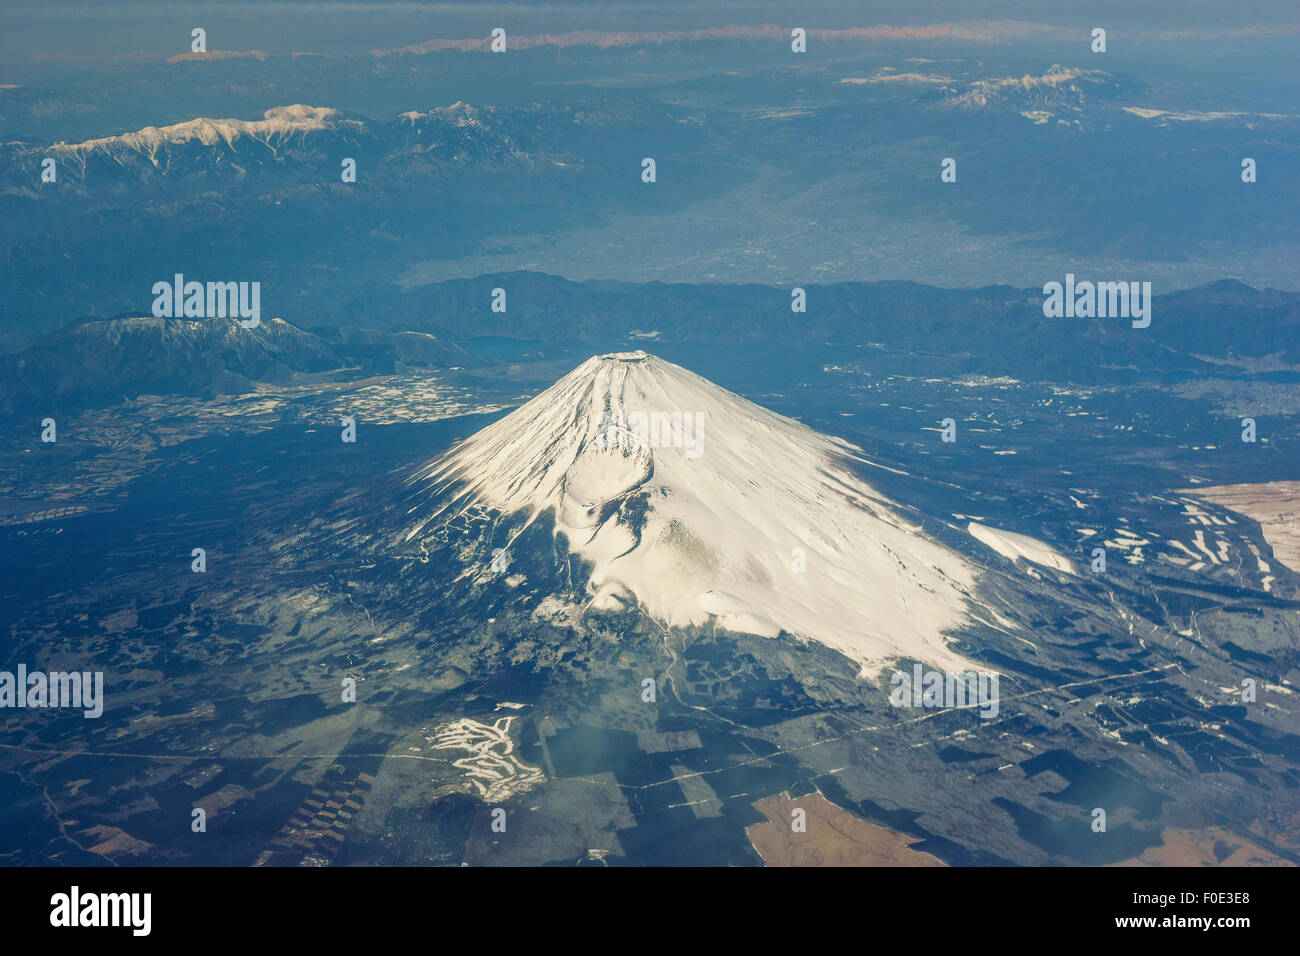 Aerial view of Mt. Fuji in Japan Stock Photo - Alamy